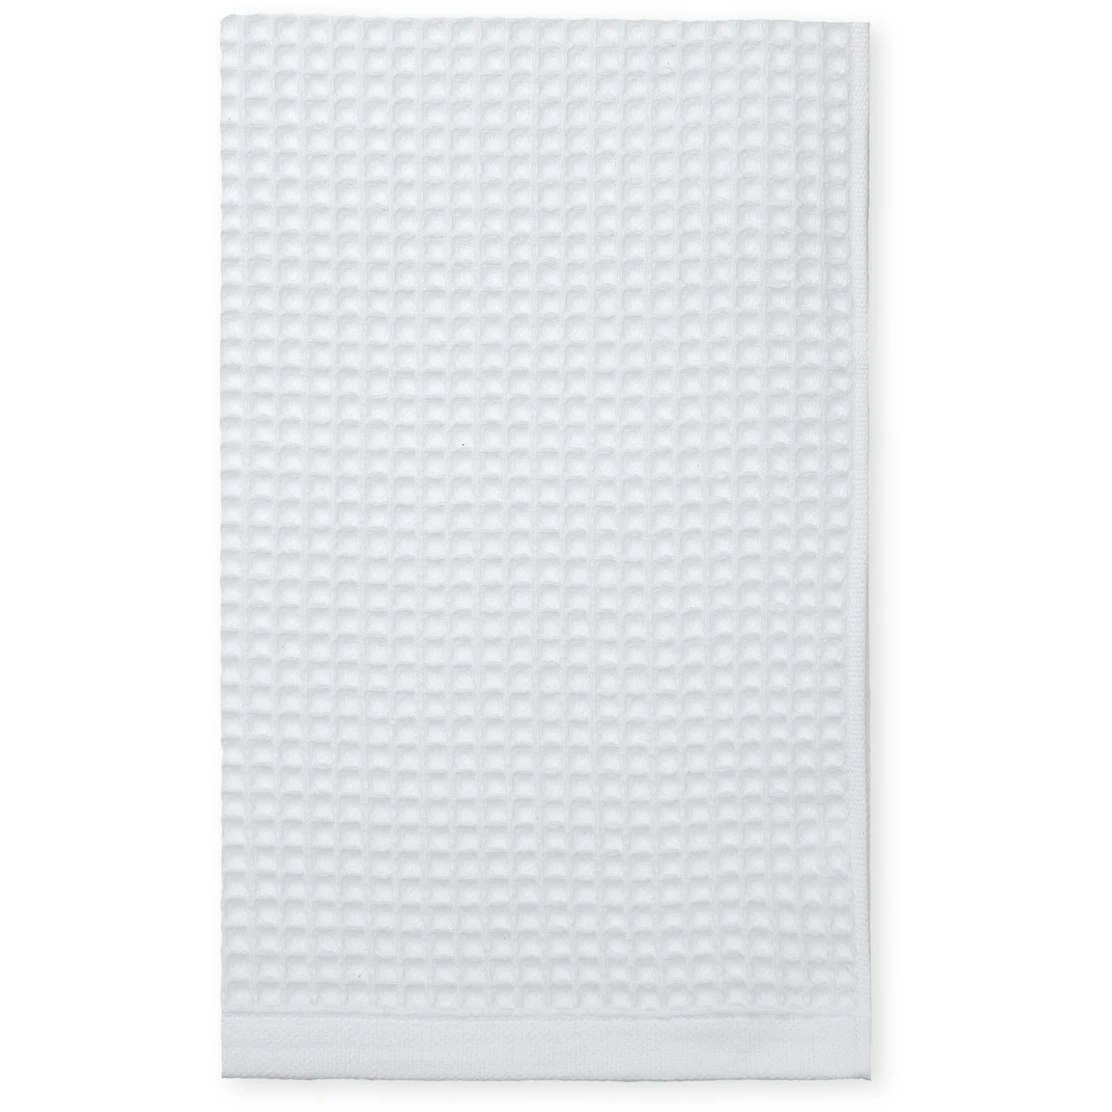 Waffel Towel 50x70 cm, White